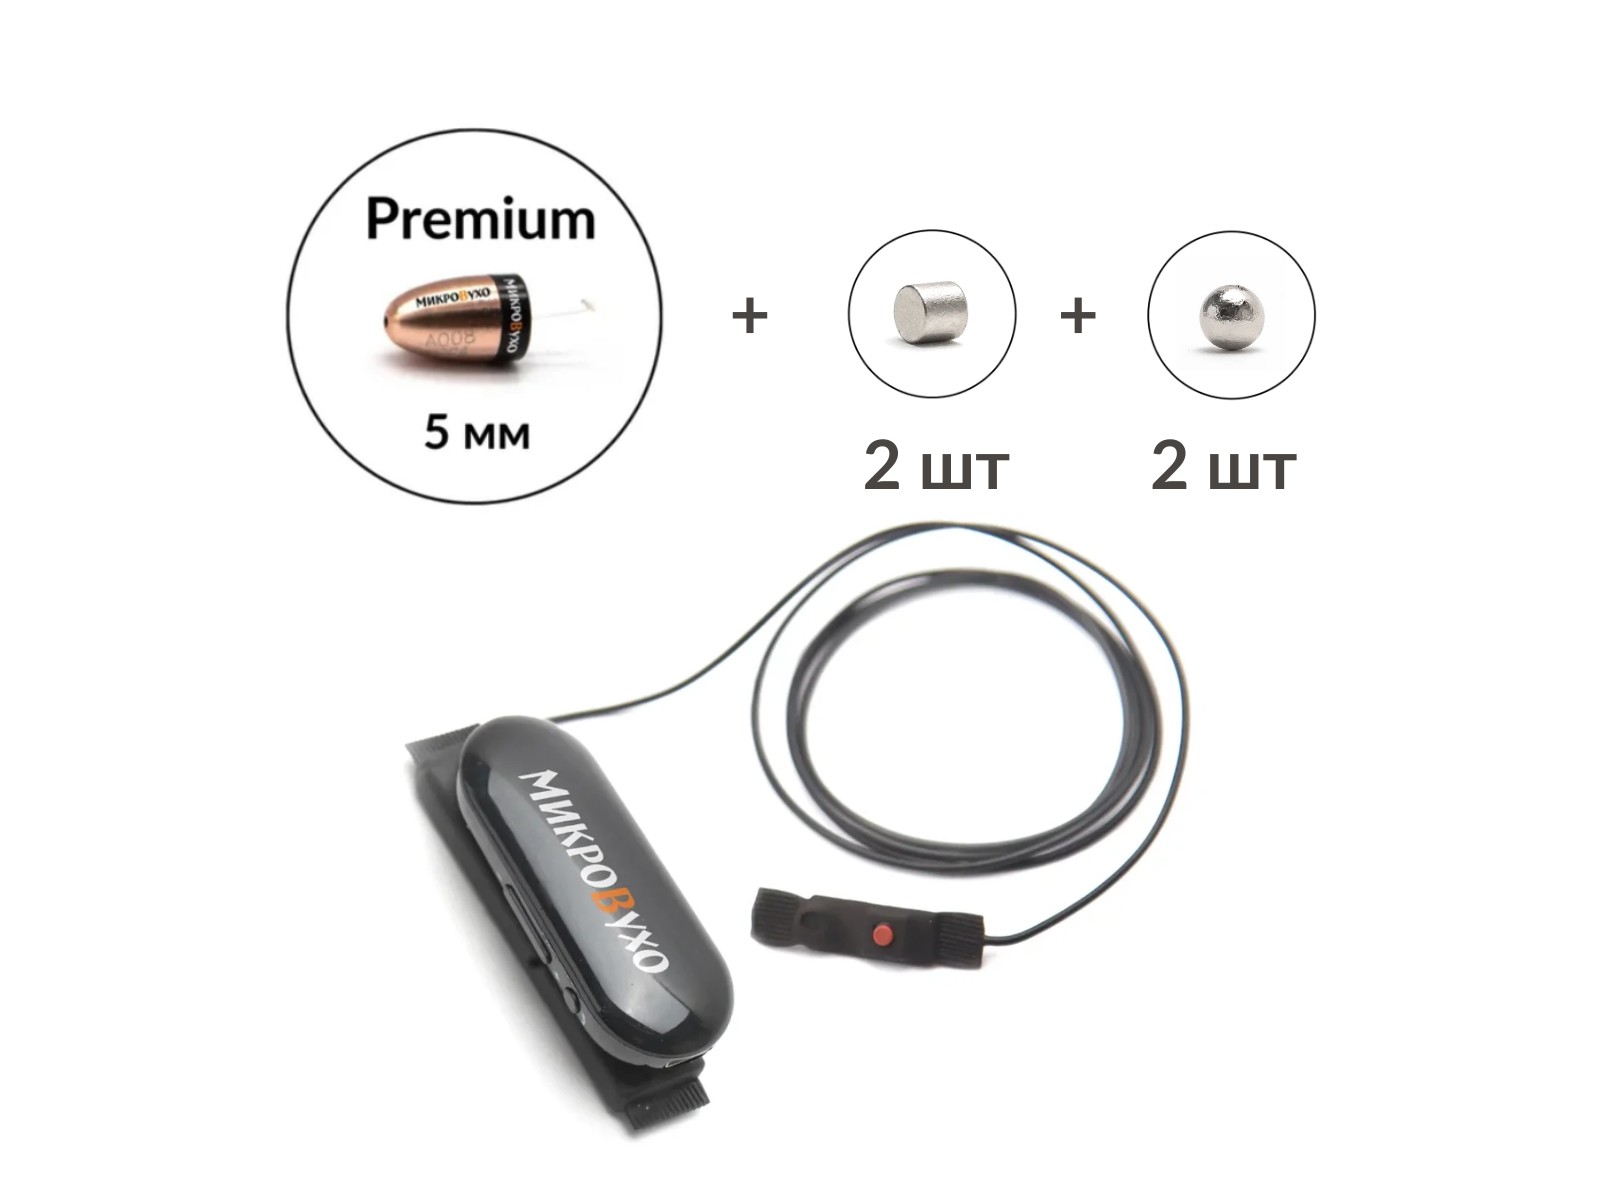 Аренда микронаушника Bluetooth Box Pro Plus с капсулой Premium и магнитами 2 мм 2